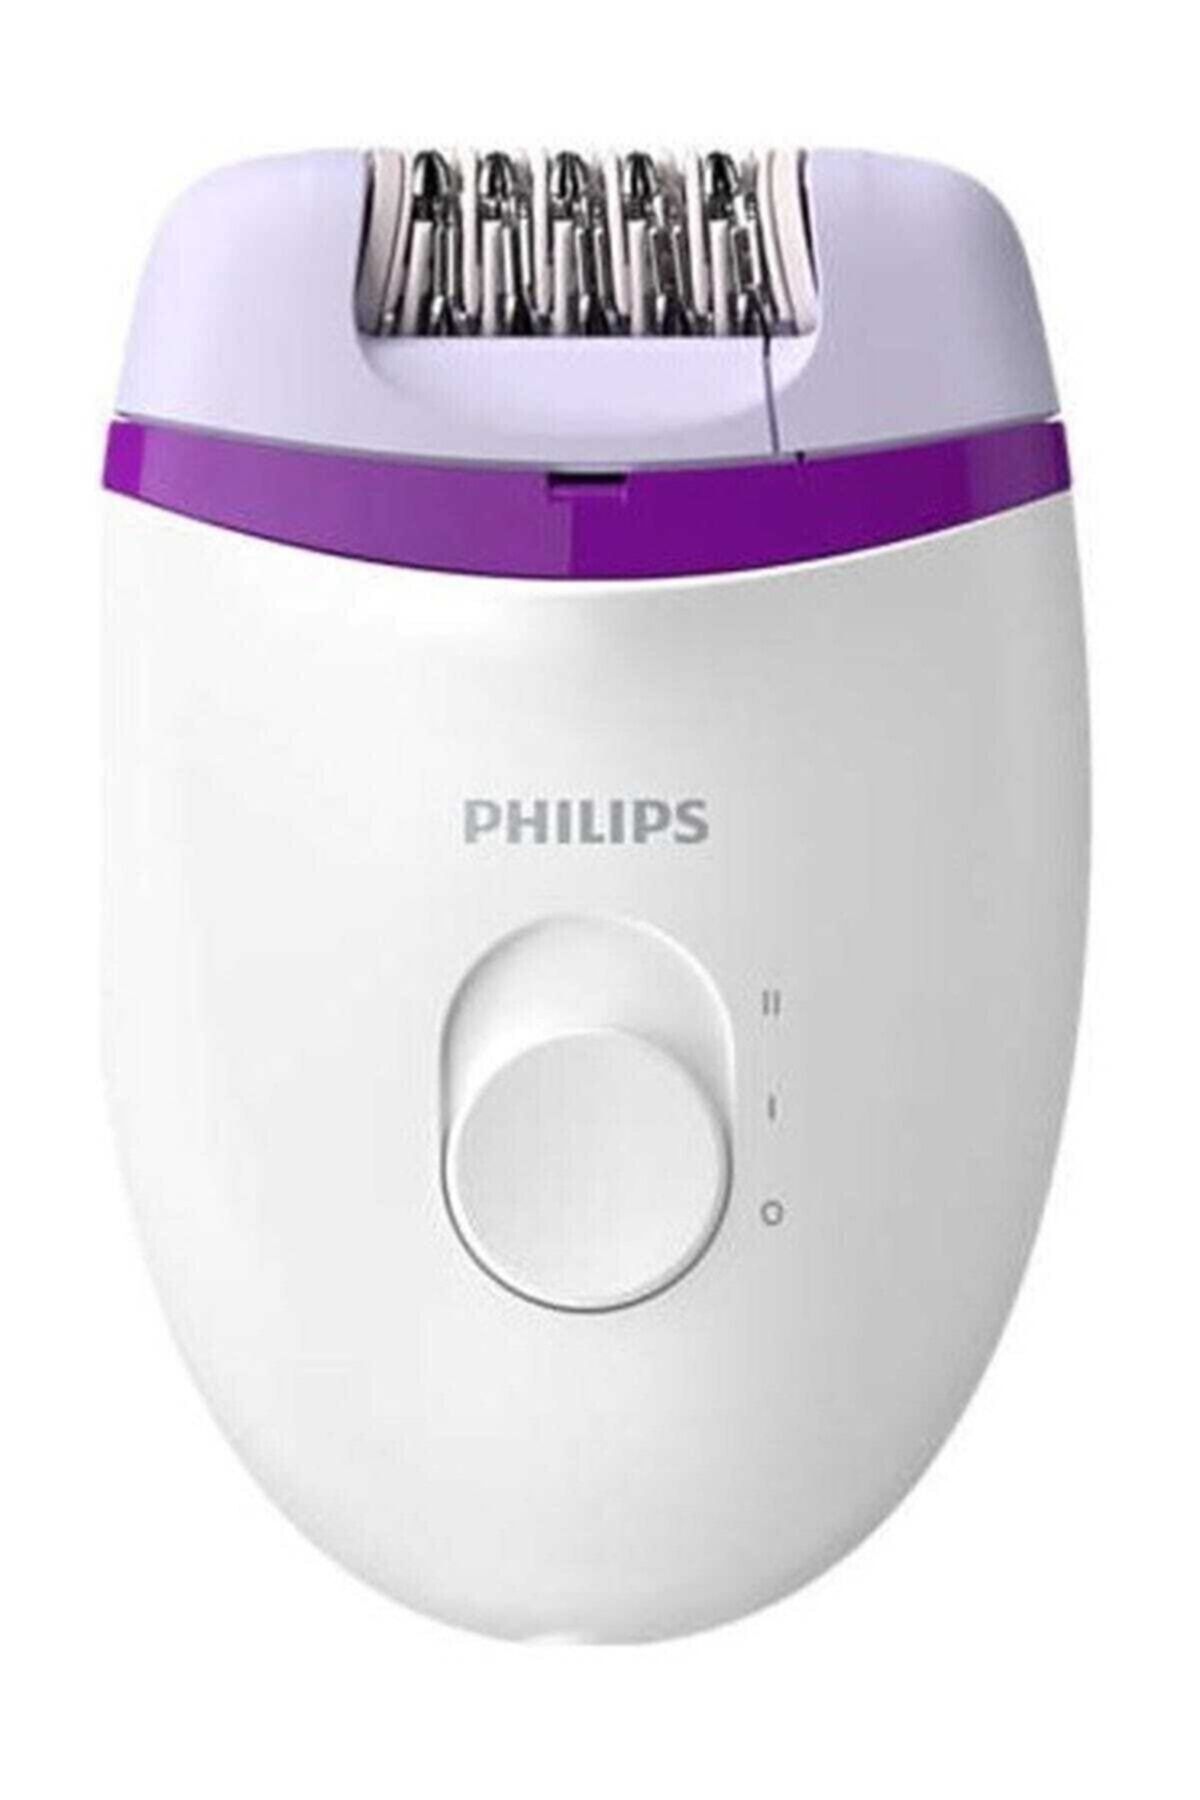 Philips Epilatör - Epilasyon Cihazı - Epilasyon Makinası - Epilatör Cihazı - Xrs1 Serisi